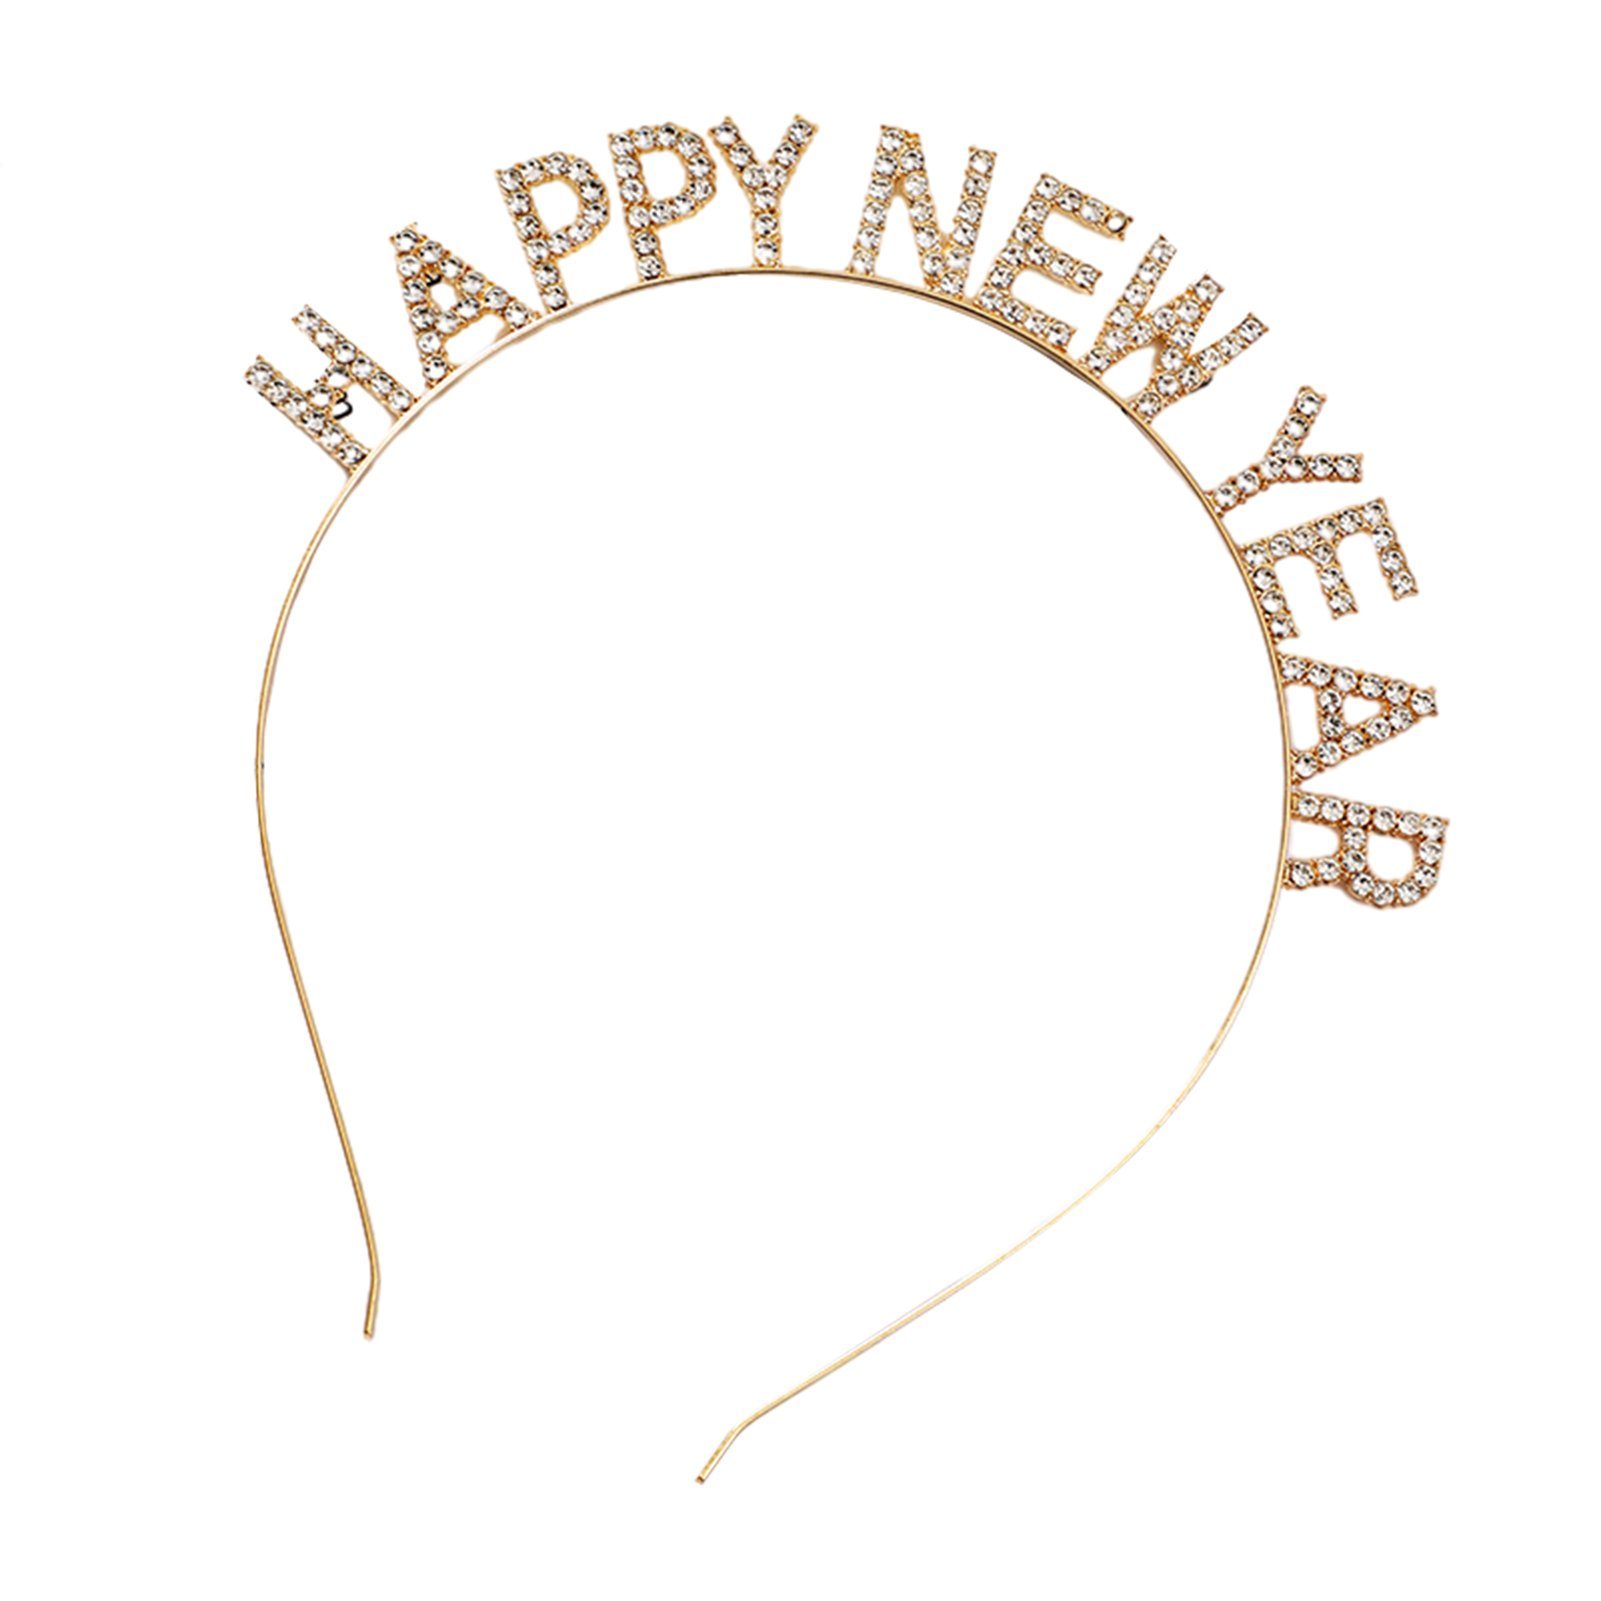 Blusmart Haarband Neujahrs-Kristall-Buchstaben-Haarband, Sinnvolles Kredit